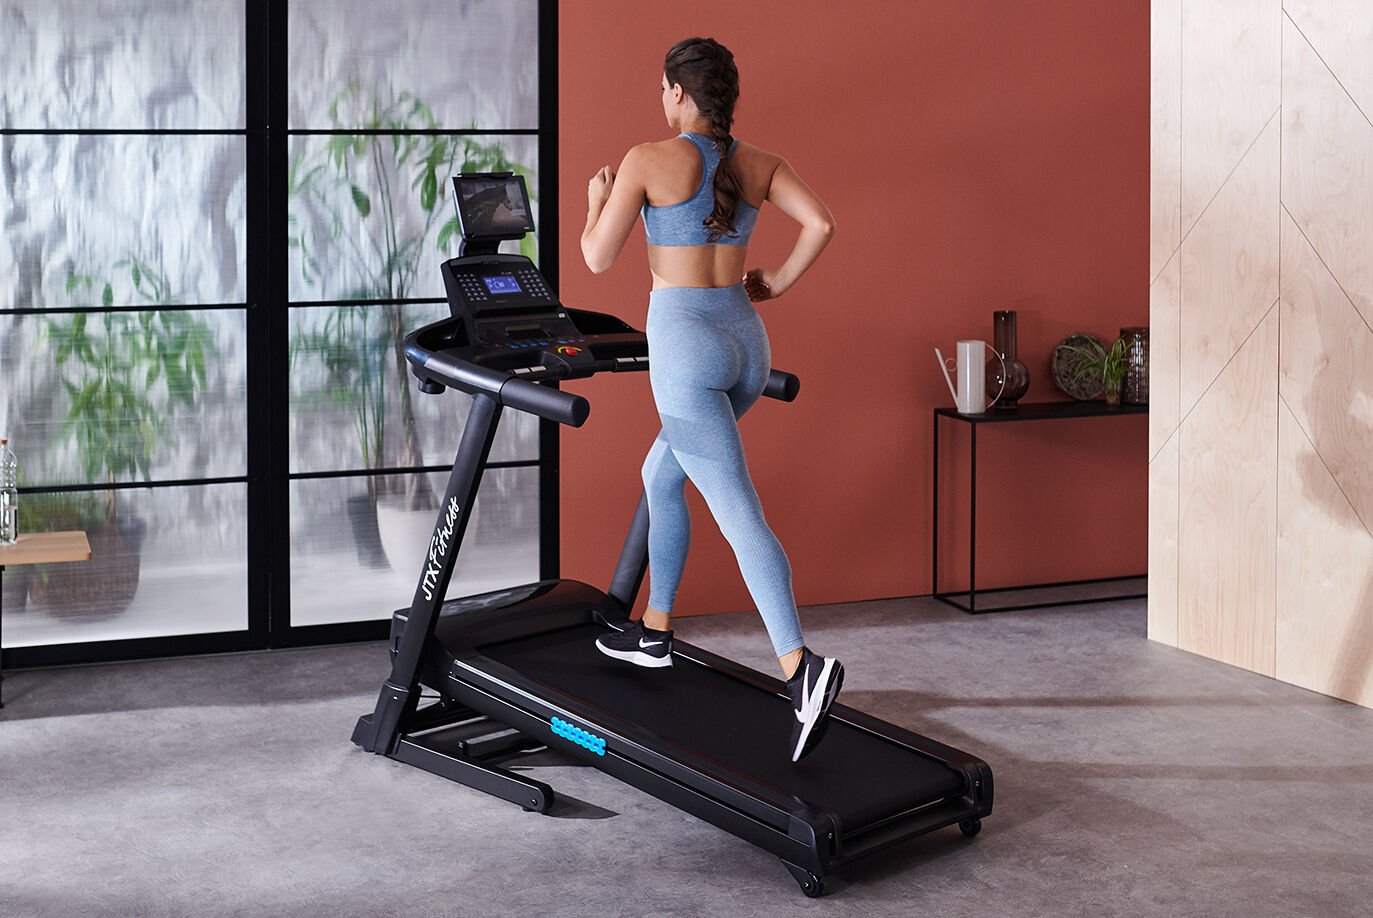 Walk, Jog or Run on This Stylish Treadmill